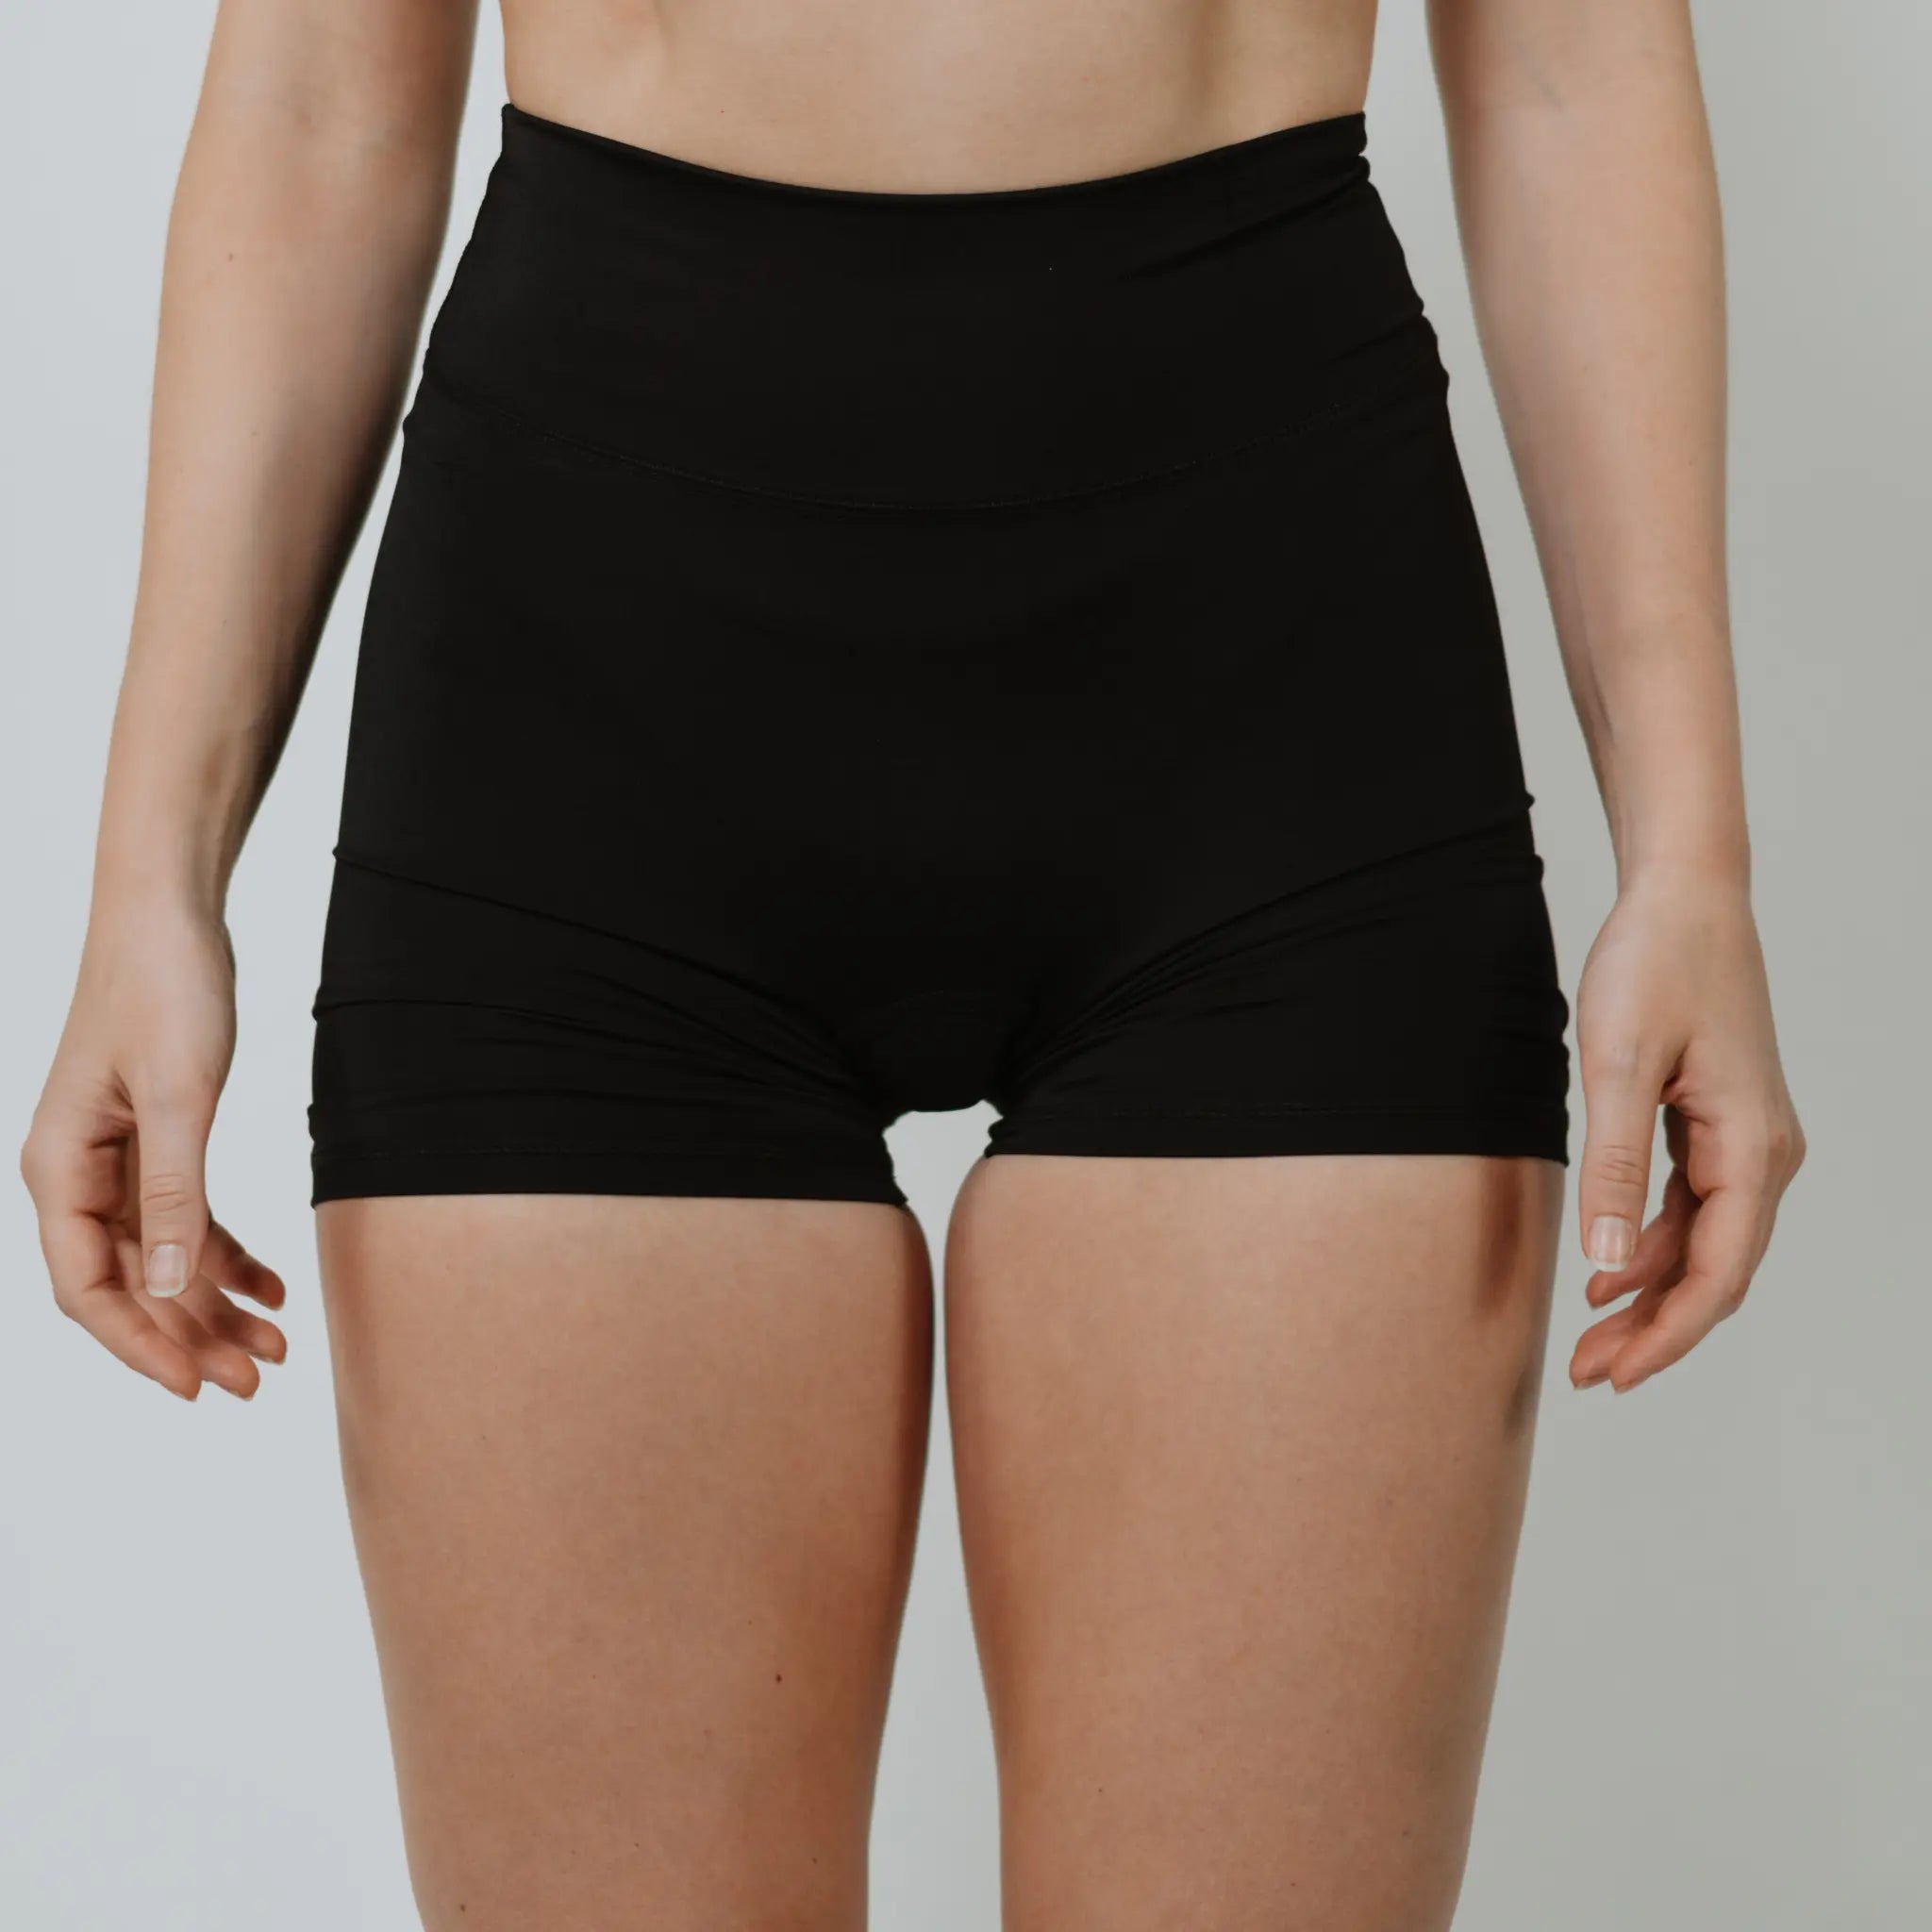 booty shorts 3 inch waistband squat proof shorts